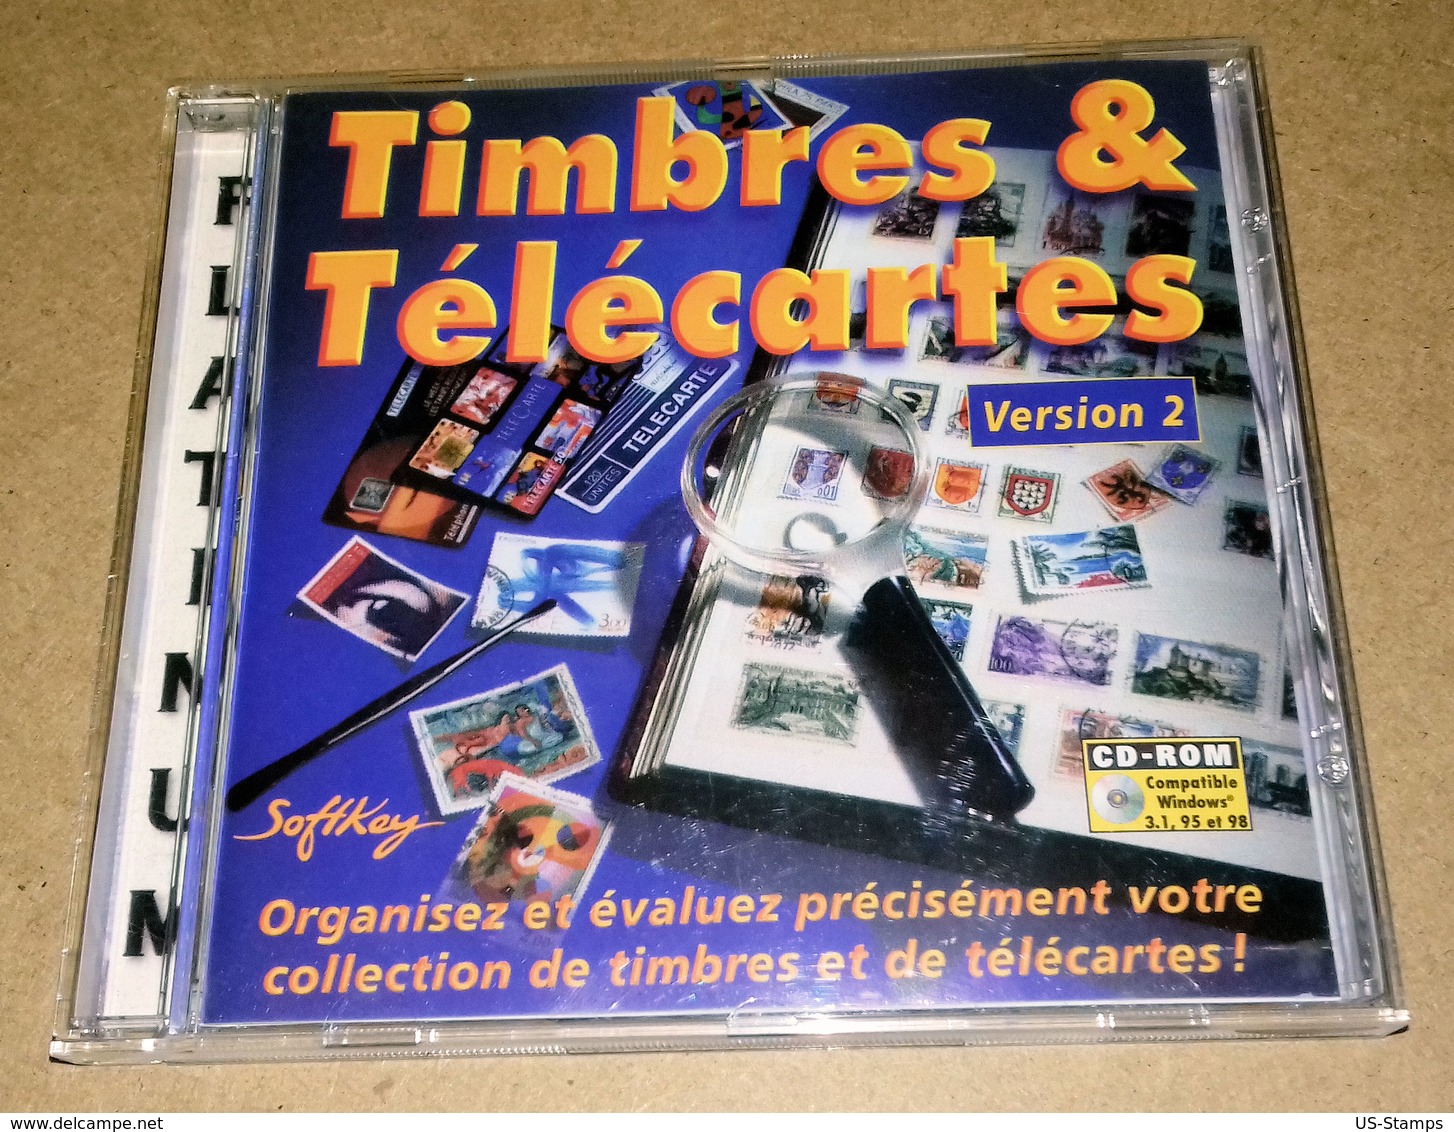 CD Timbres Et Télécartes Version 2 (SoftKey) - Französisch